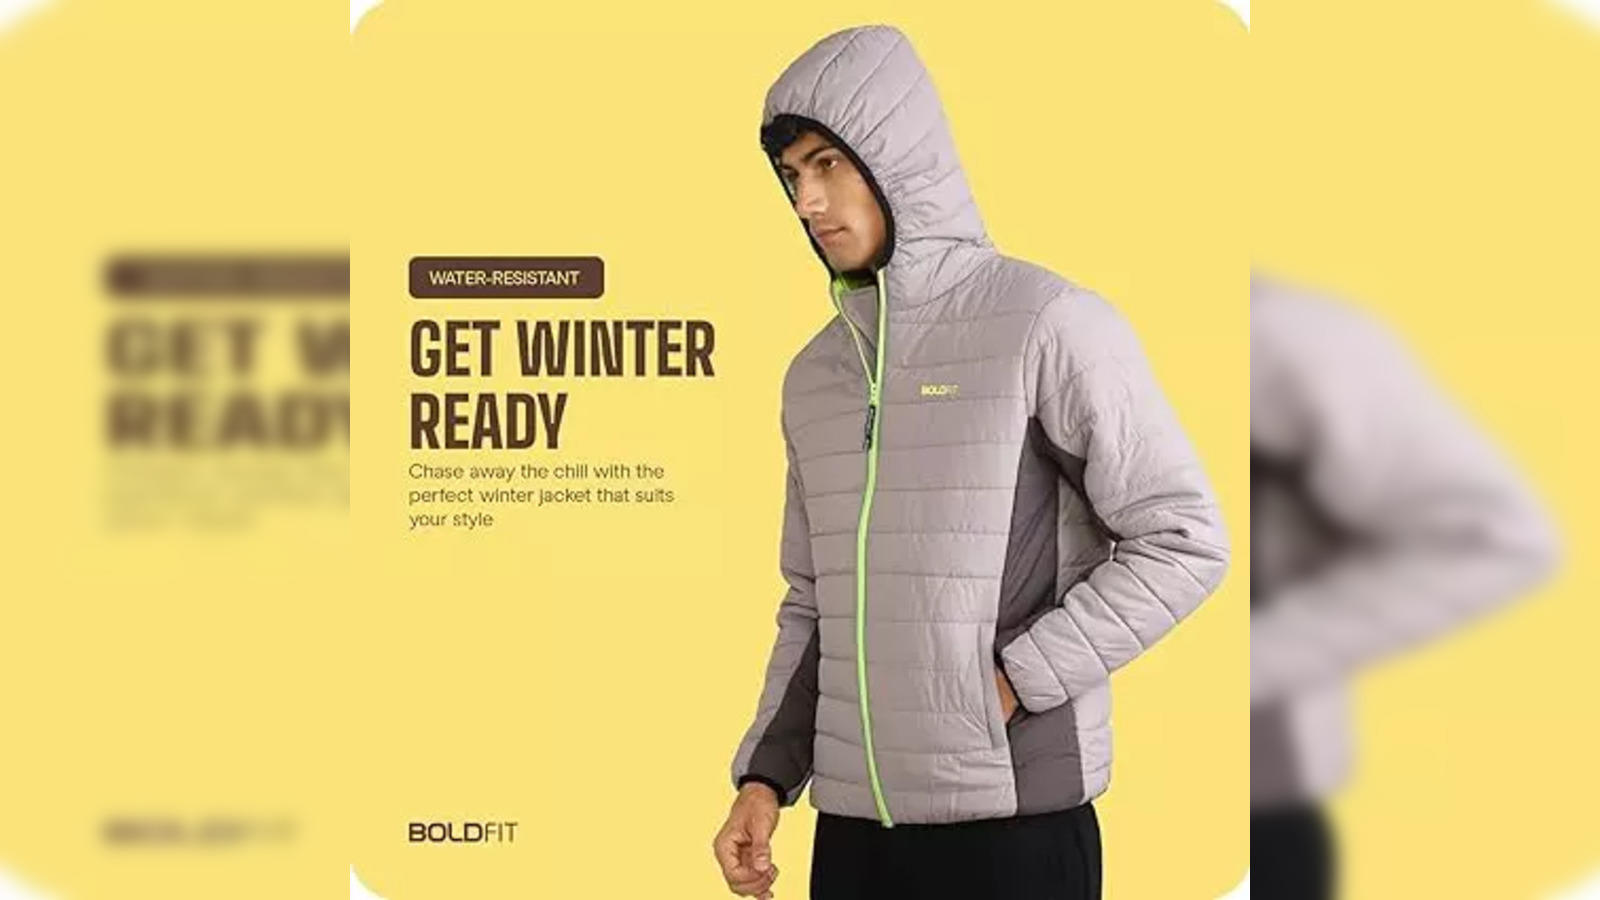 Heavy winter sale || Sweatshirt 275/- jacket 450/- || Retail Special ||  Offer Till 25 January 2021 - YouTube